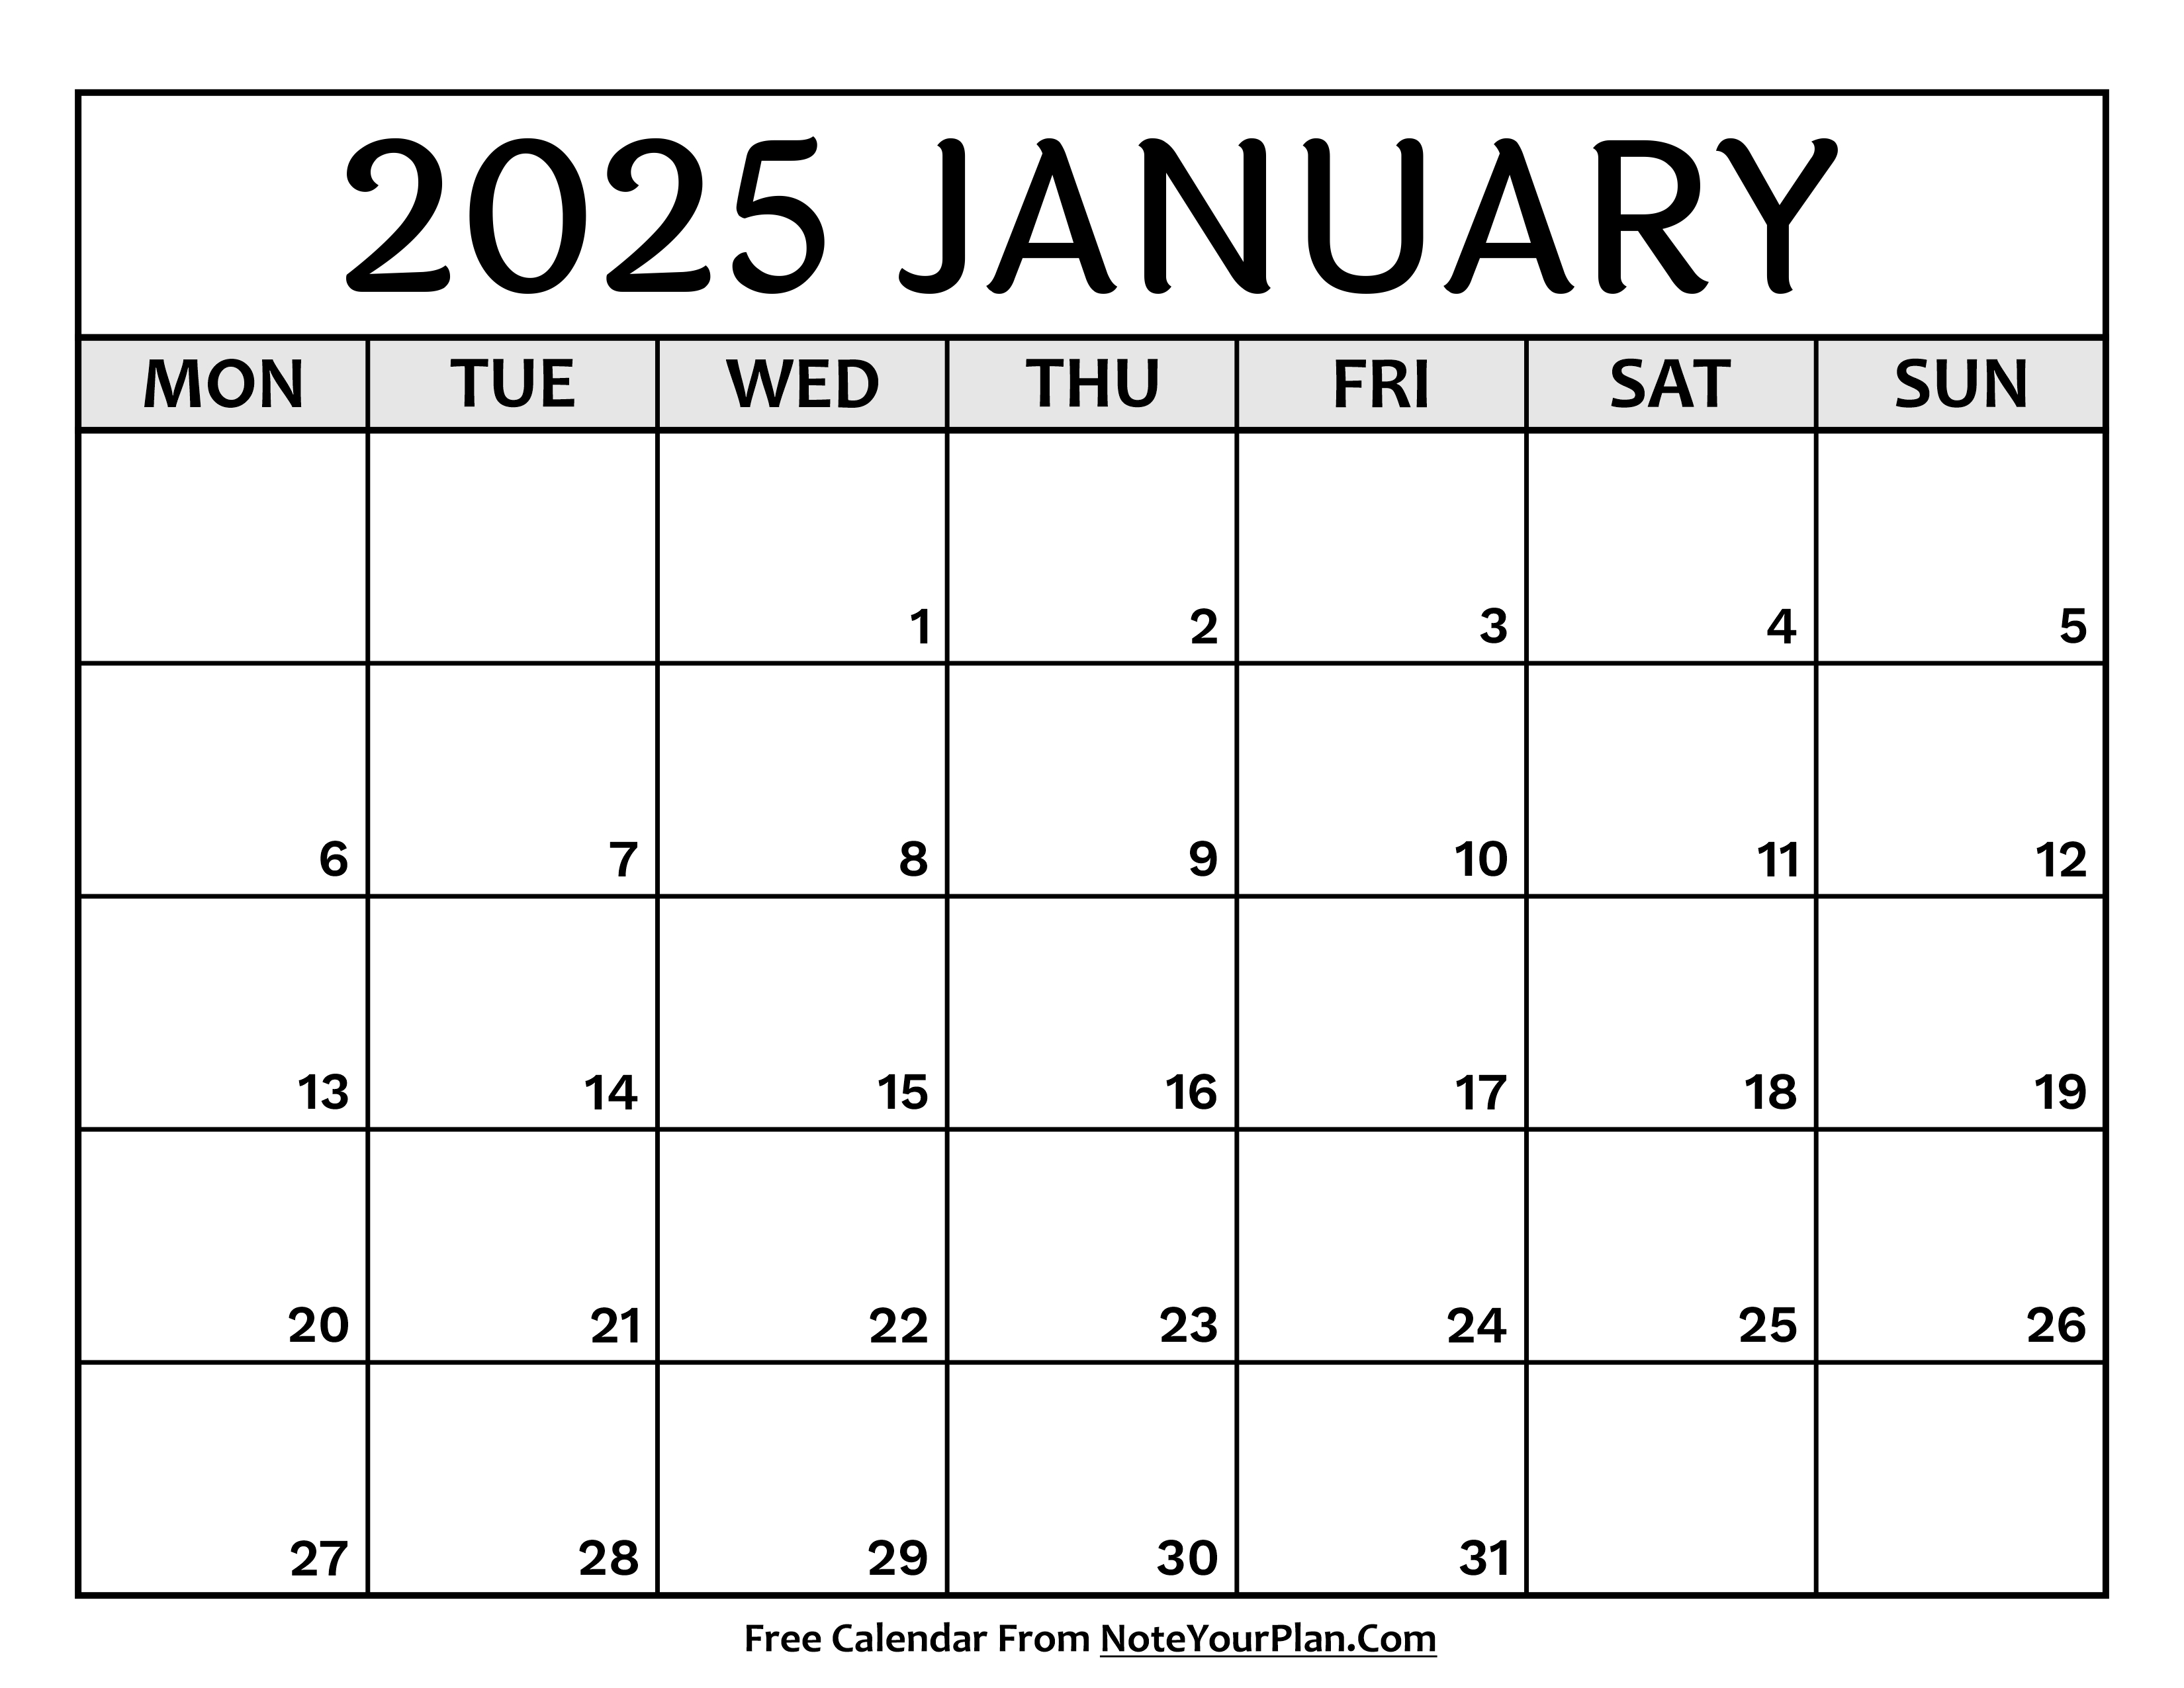 Free January Calendar 2025